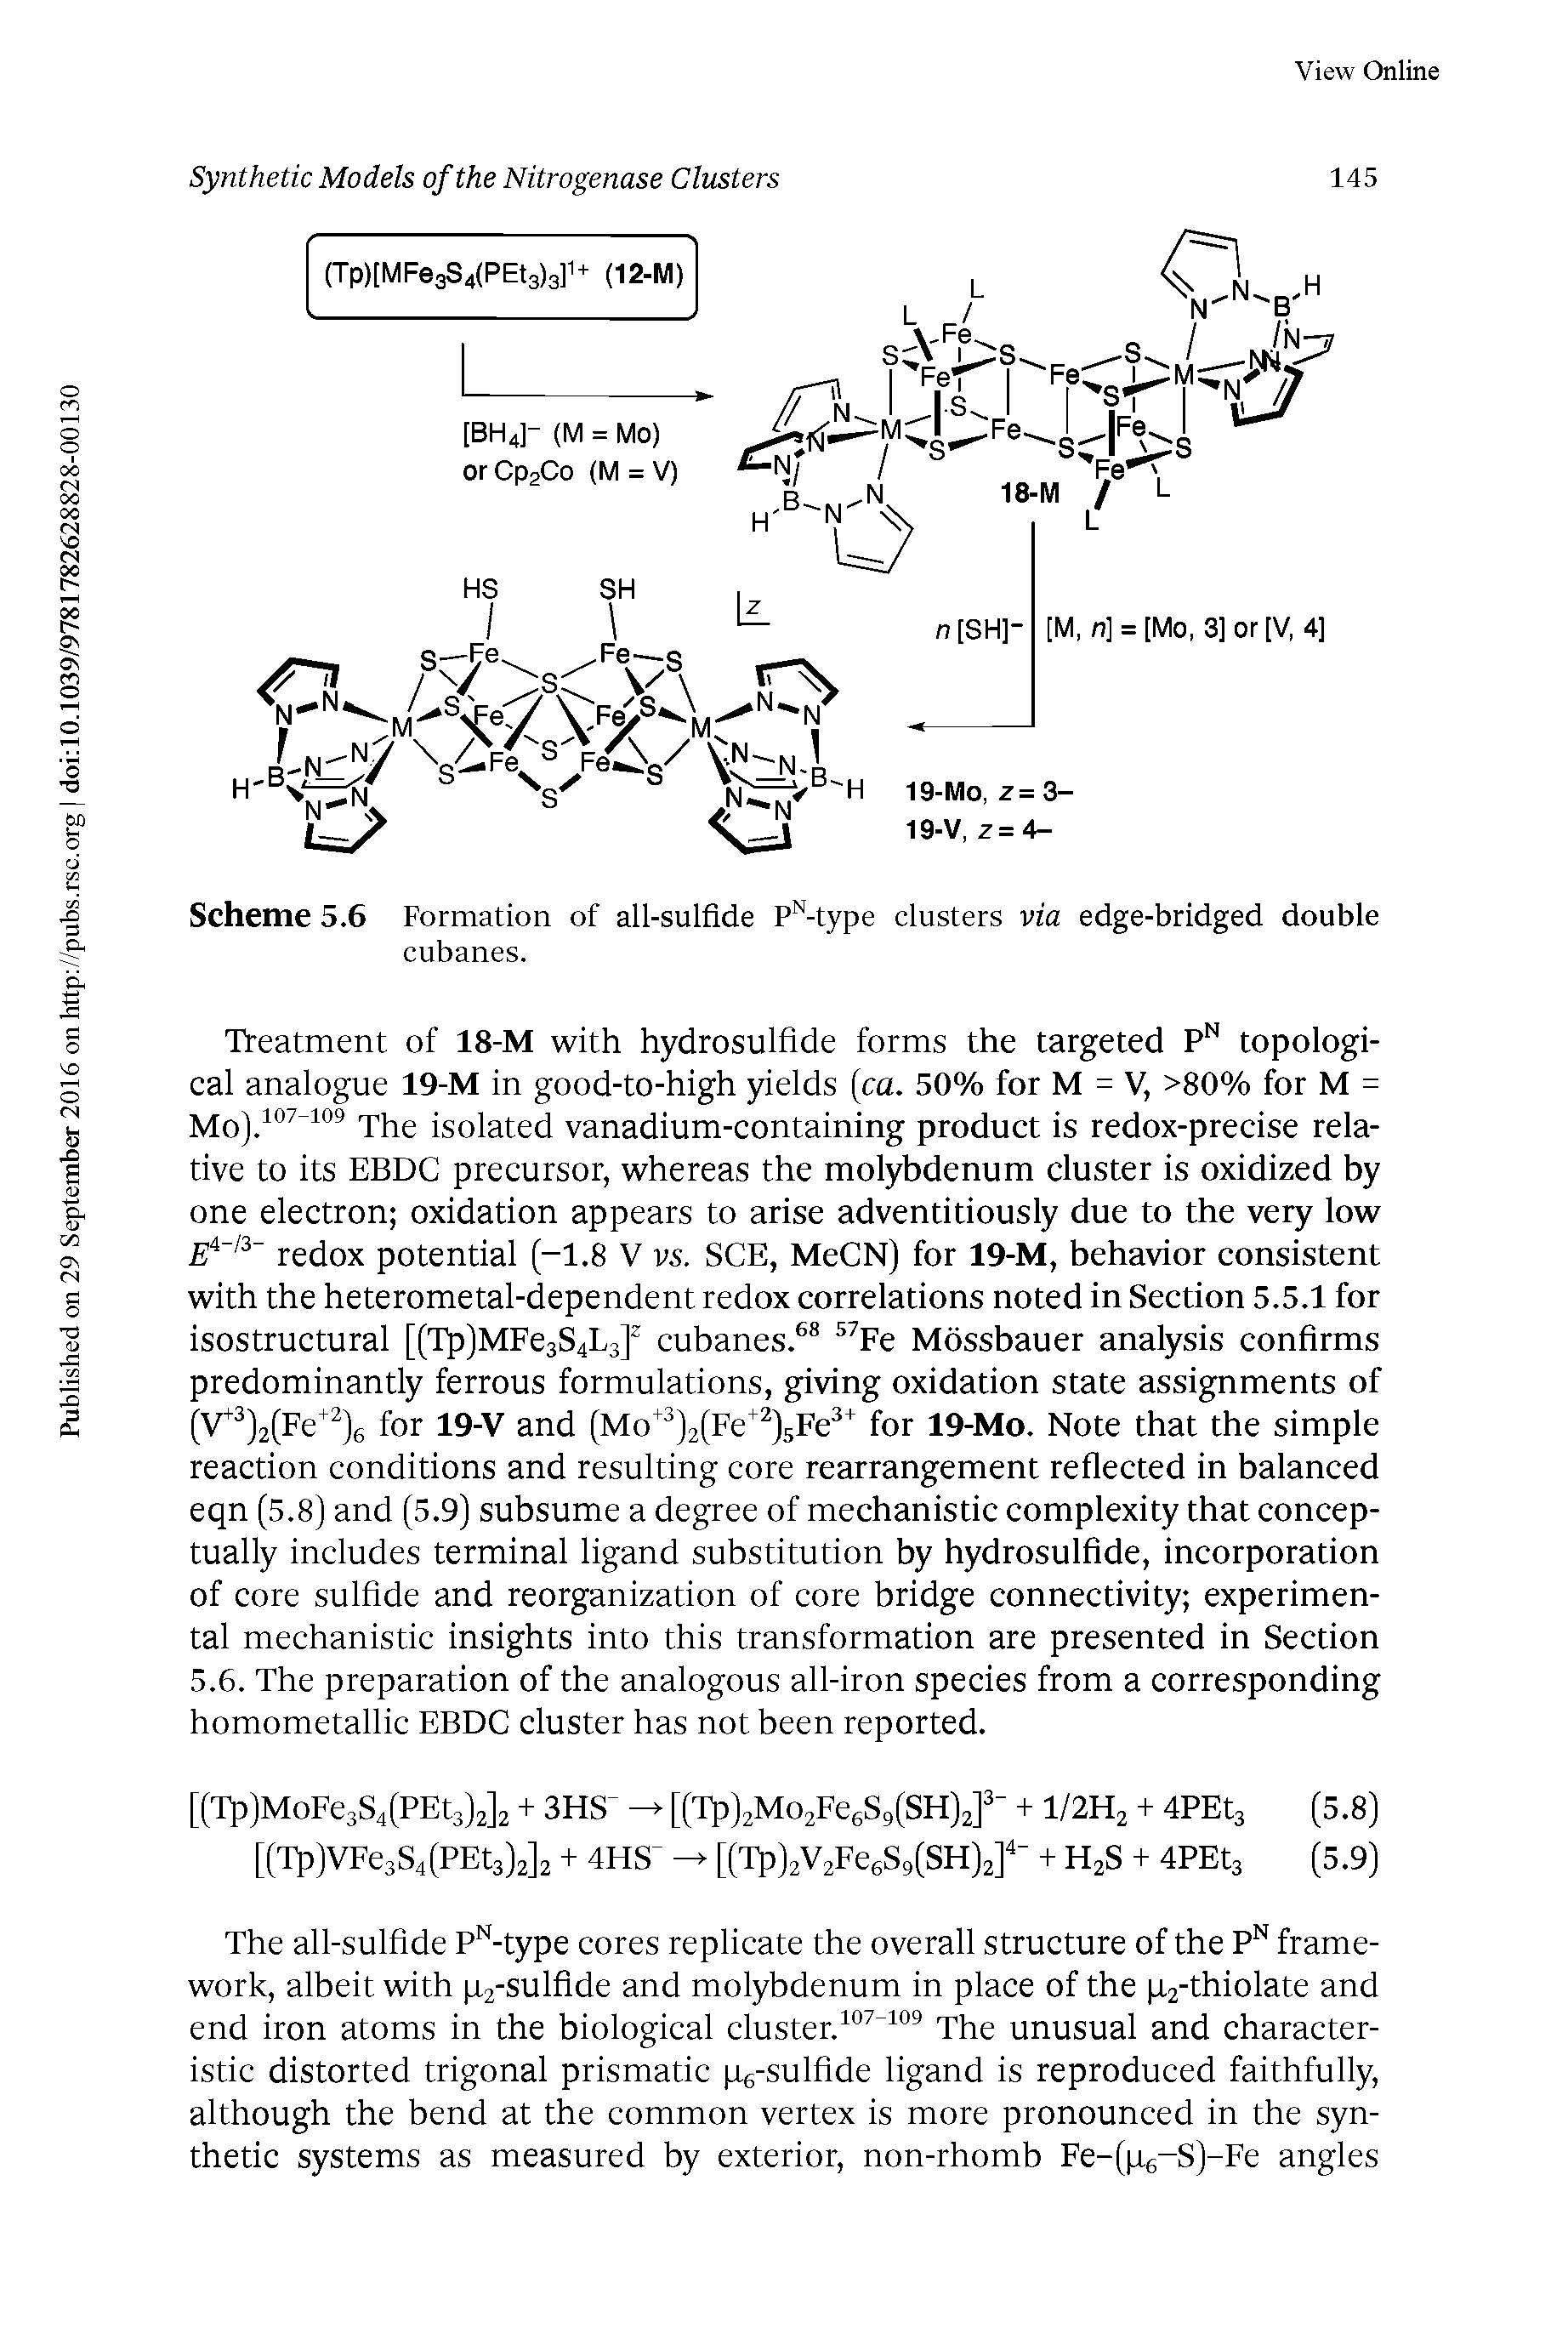 Scheme 5.6 Formation of all-sulfide P -type clusters via edge-bridged double cubanes.